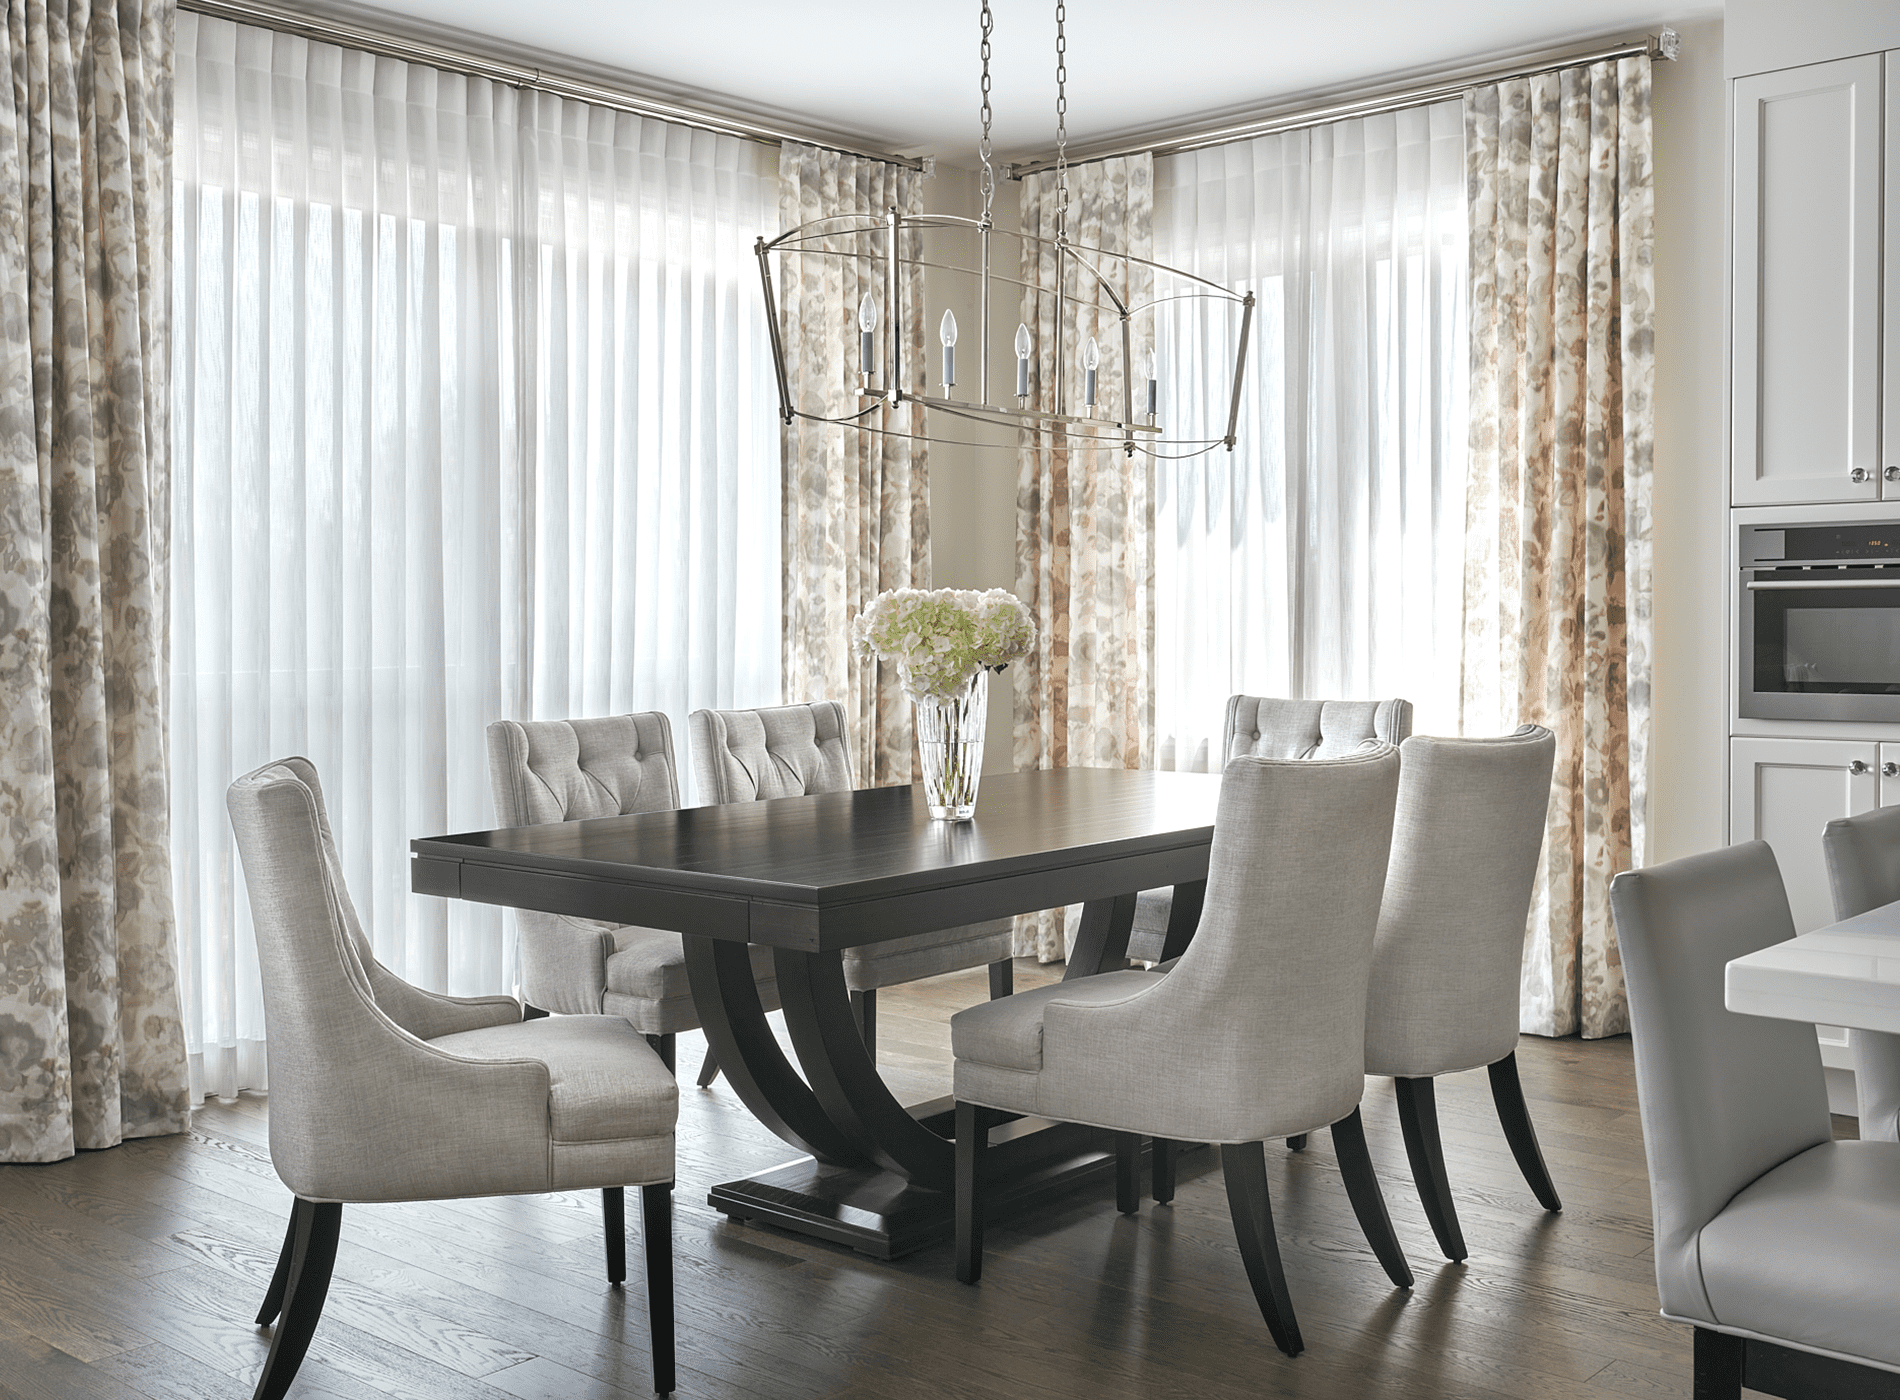 Pretty In Blush - Kitchen and Dining Room Interior Design 5